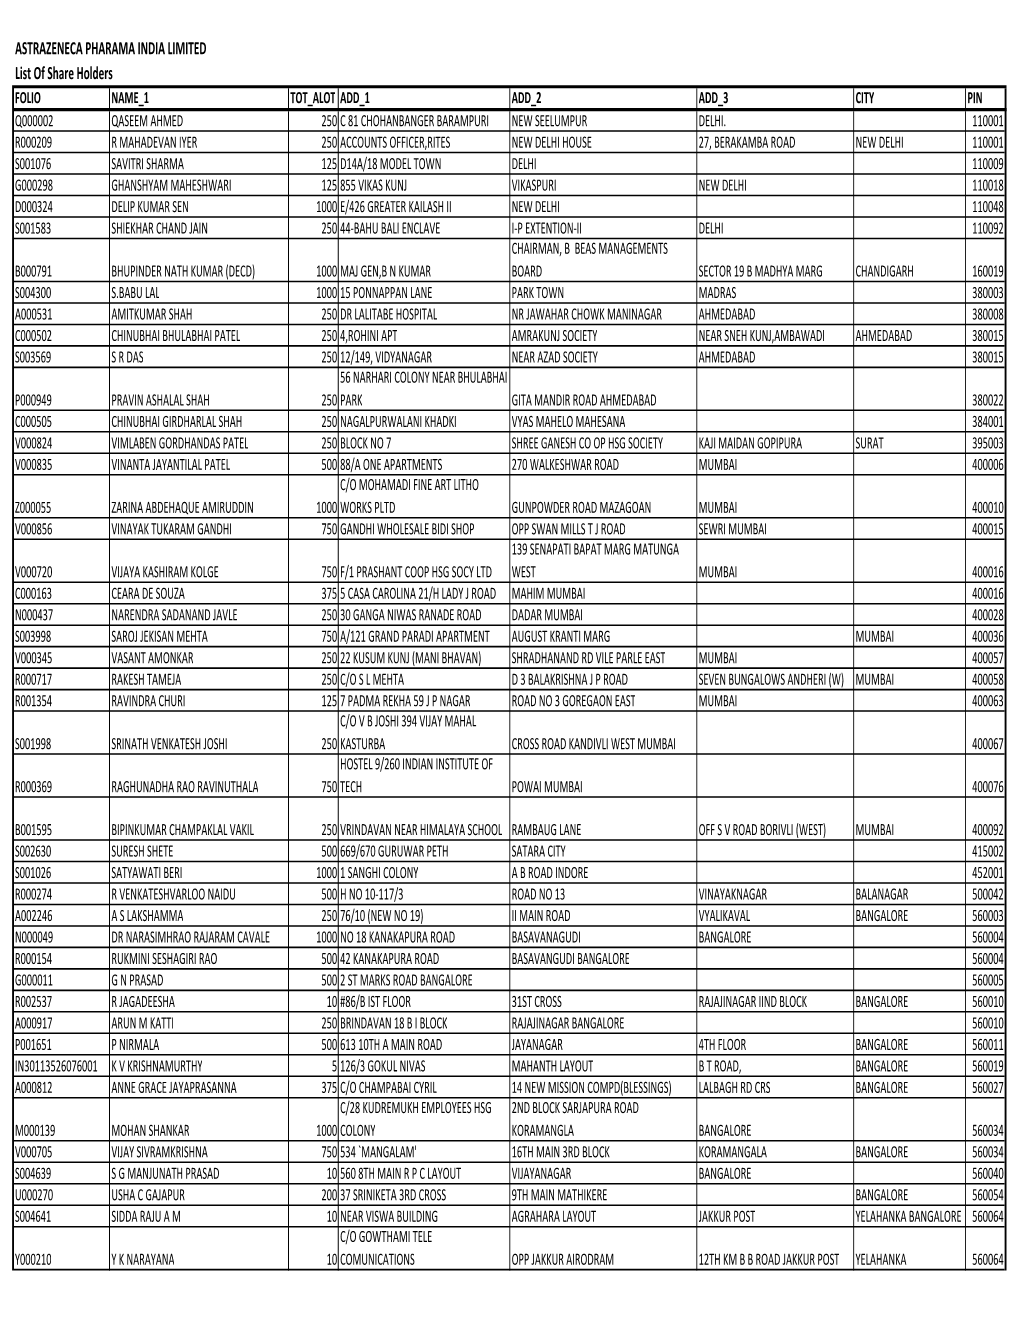 ASTRAZENECA PHARAMA INDIA LIMITED List of Share Holders